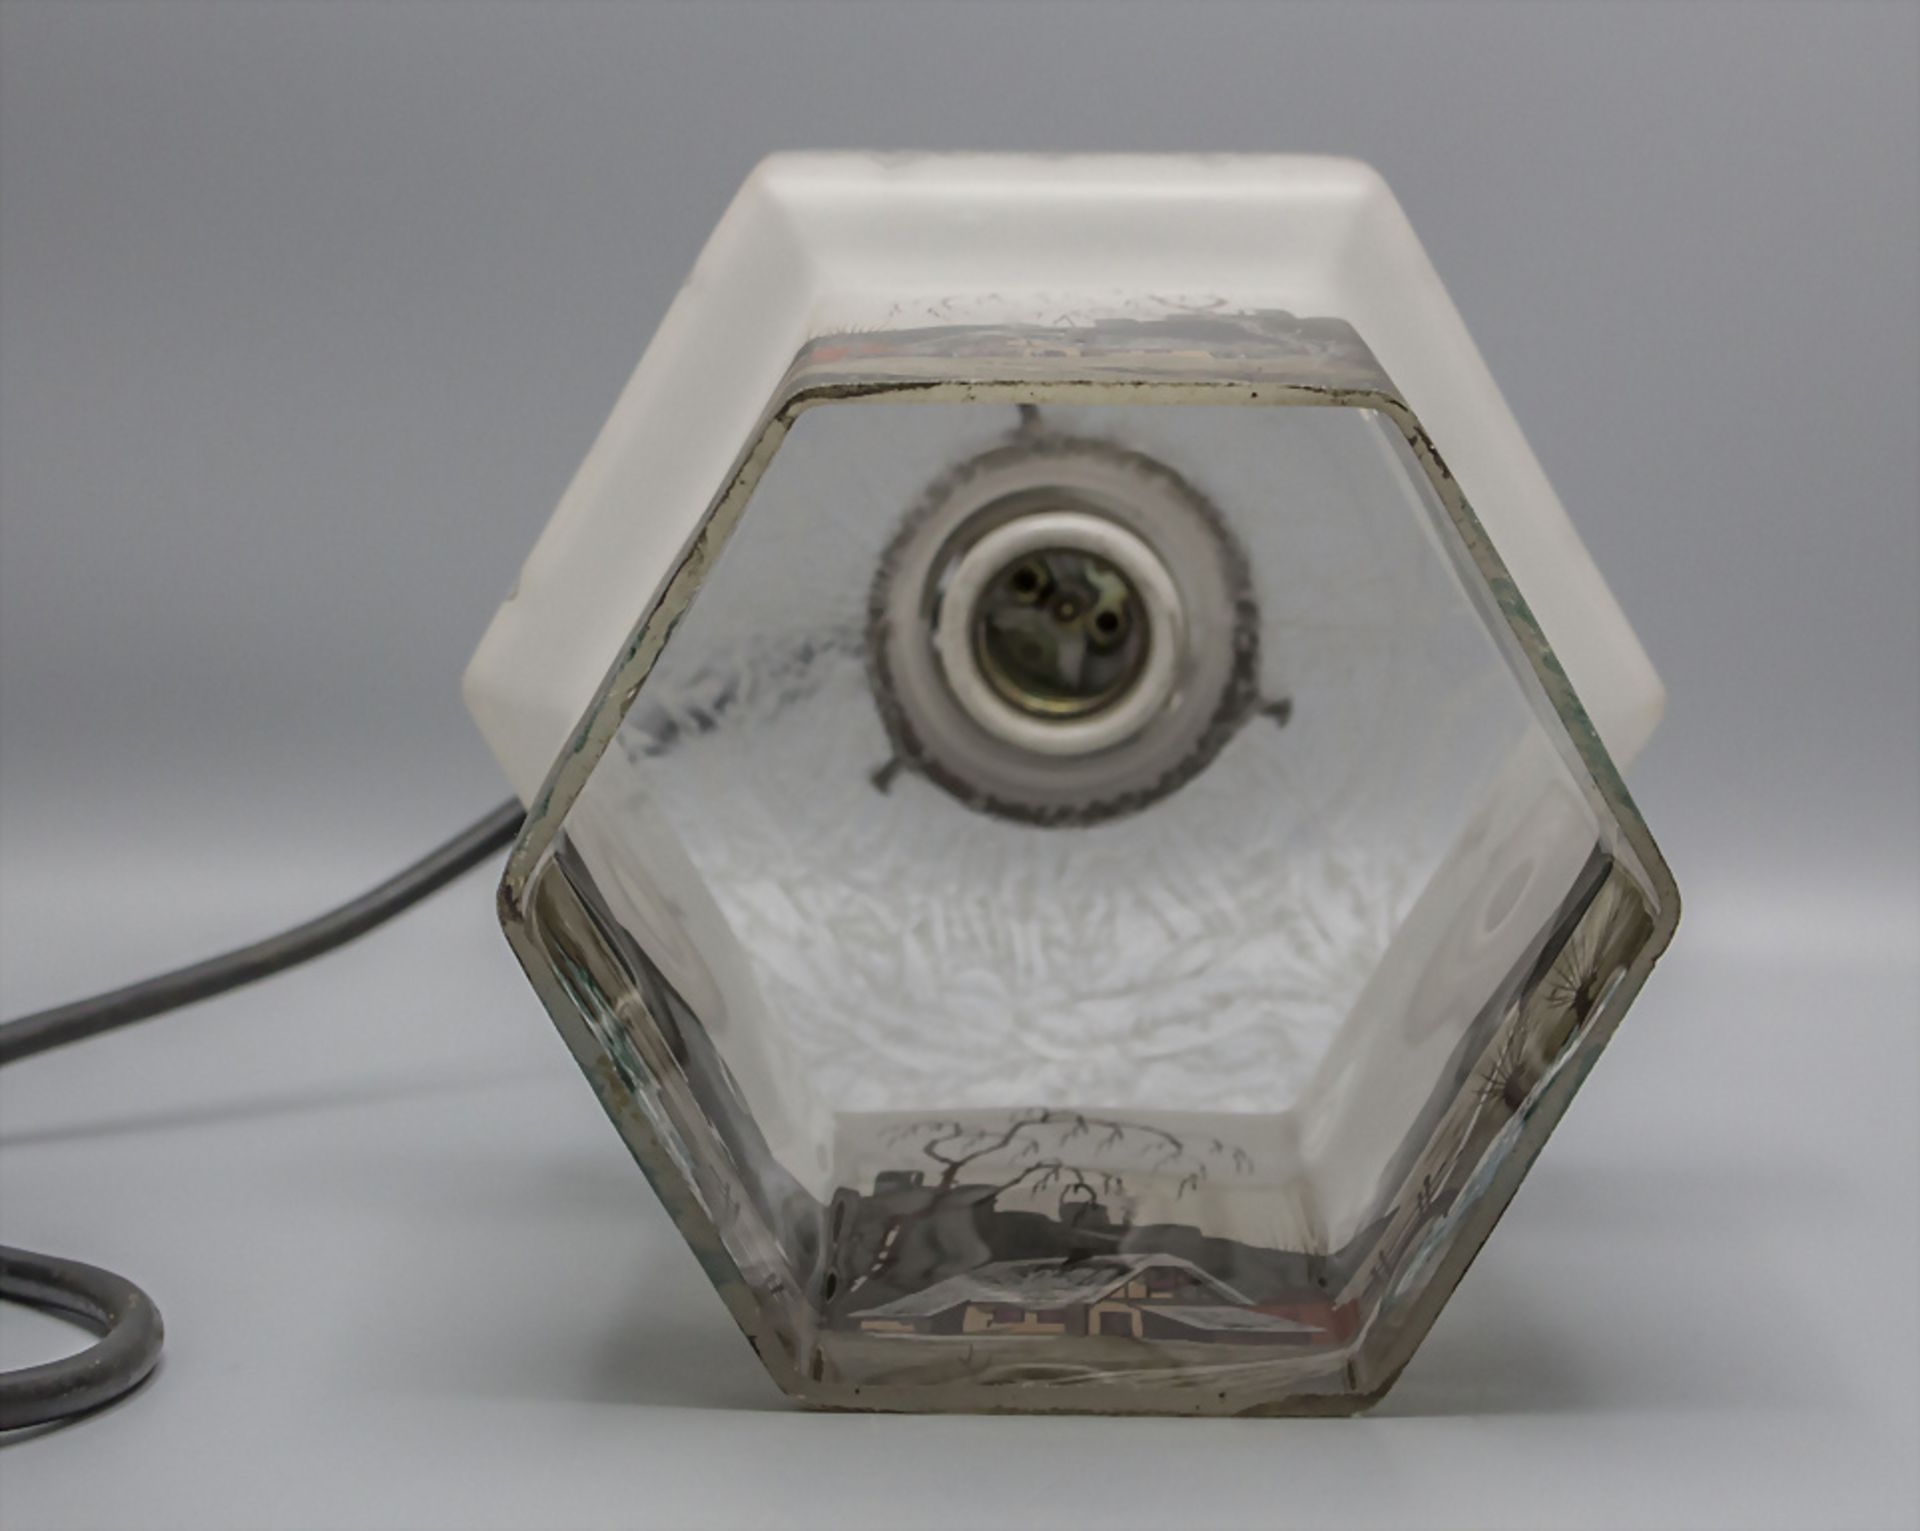 Deckenlampe / A ceiling lamp, wohl Deutschland, 1. Hälfte 20. Jh. - Image 6 of 6